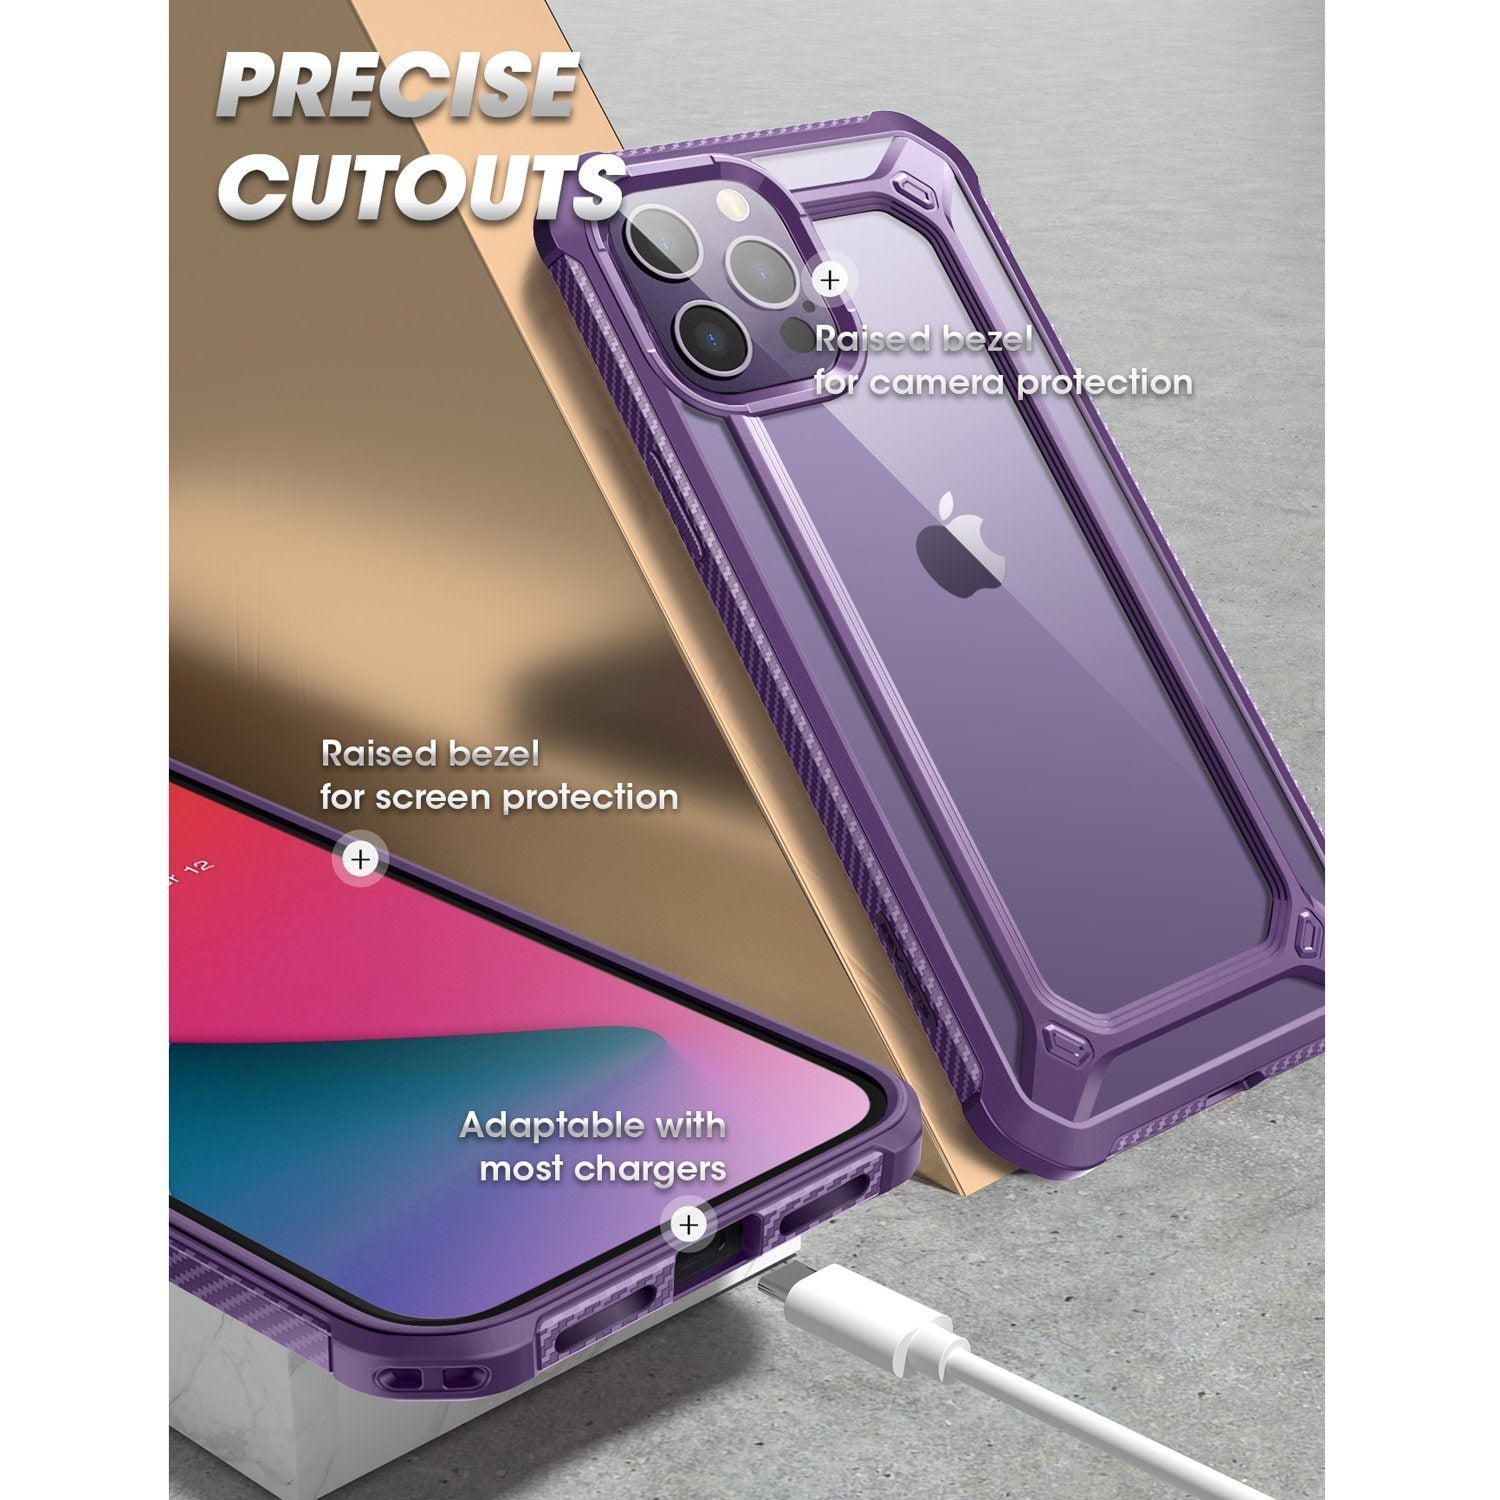 Supcase UB Exo Premium Hybrid Protective Clear Bumper Case for iPhone 12 Pro Max 6.7"(2020), Purple Default Supcase 